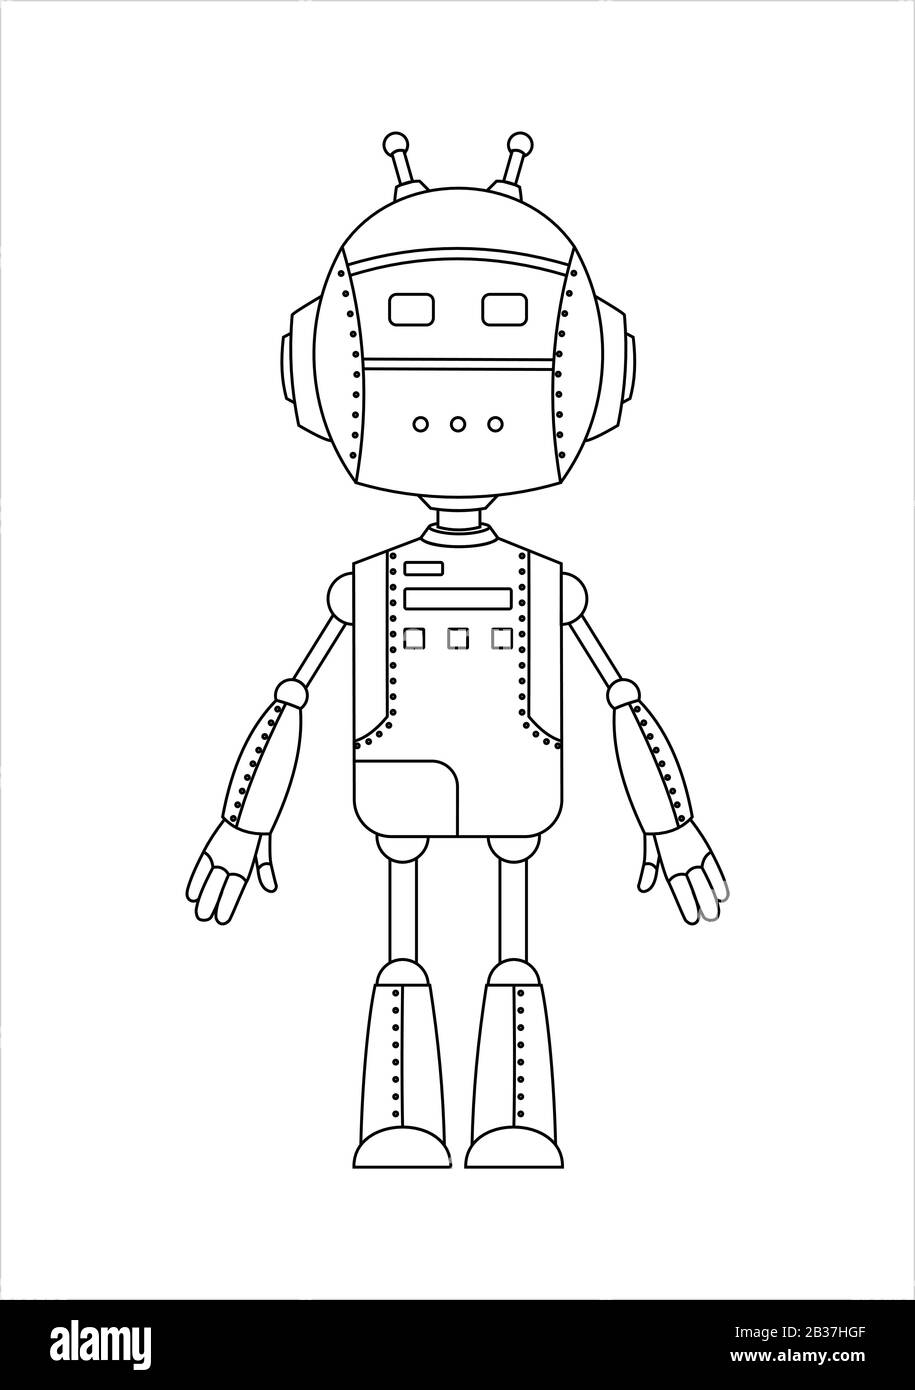 Umreißender Android-Roboter-Charakter Mit Zwei Antennen. Stock Vektor